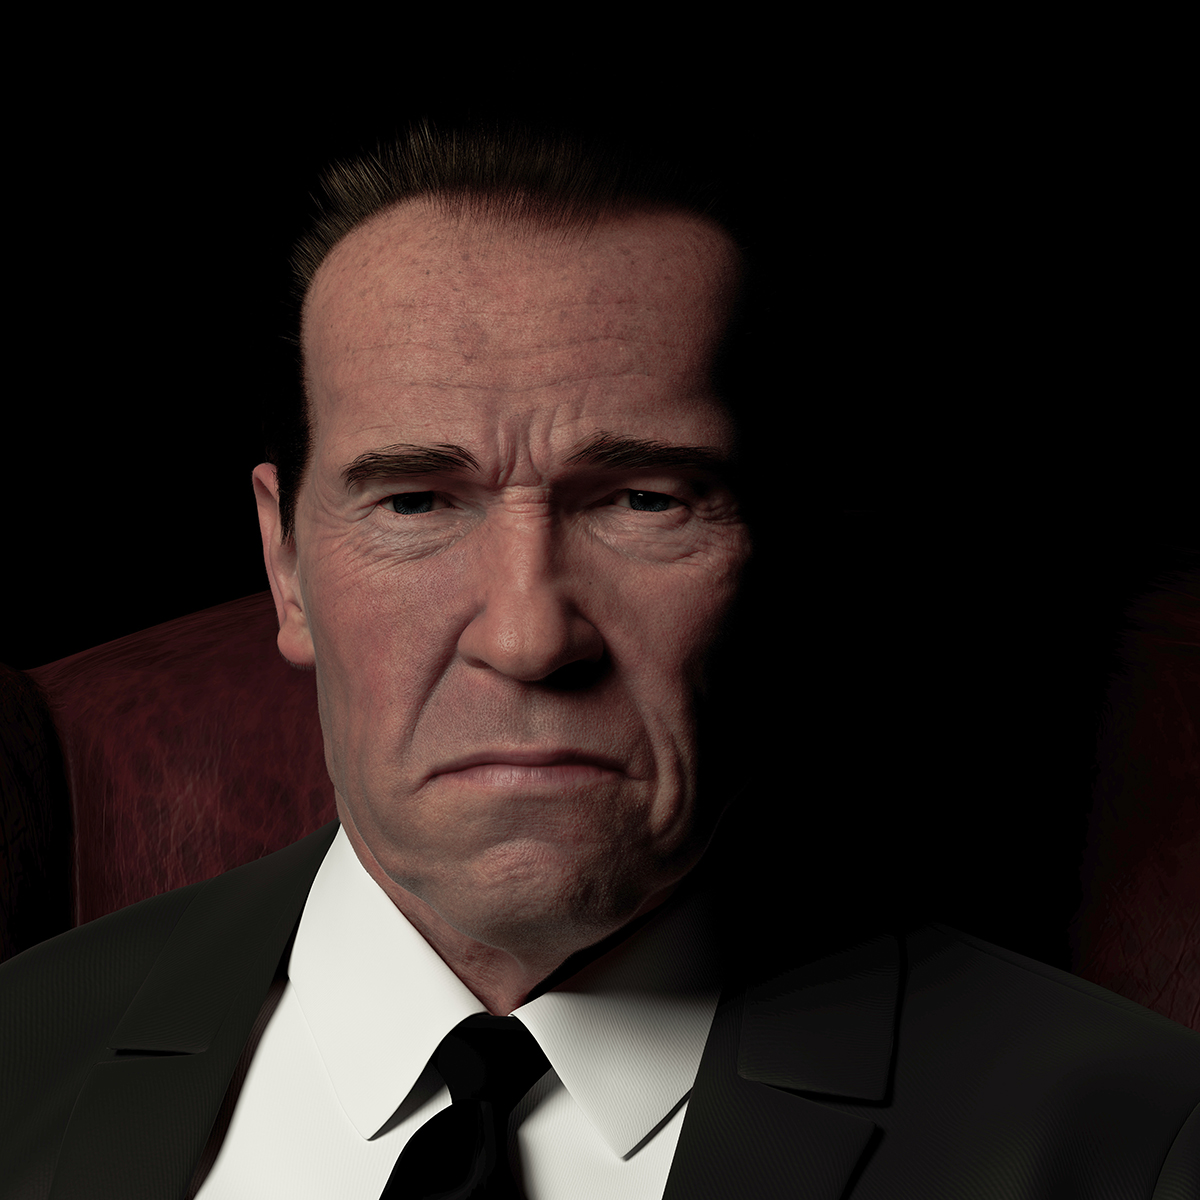 Portrait "Arnold Schwarzenegger" groom groom